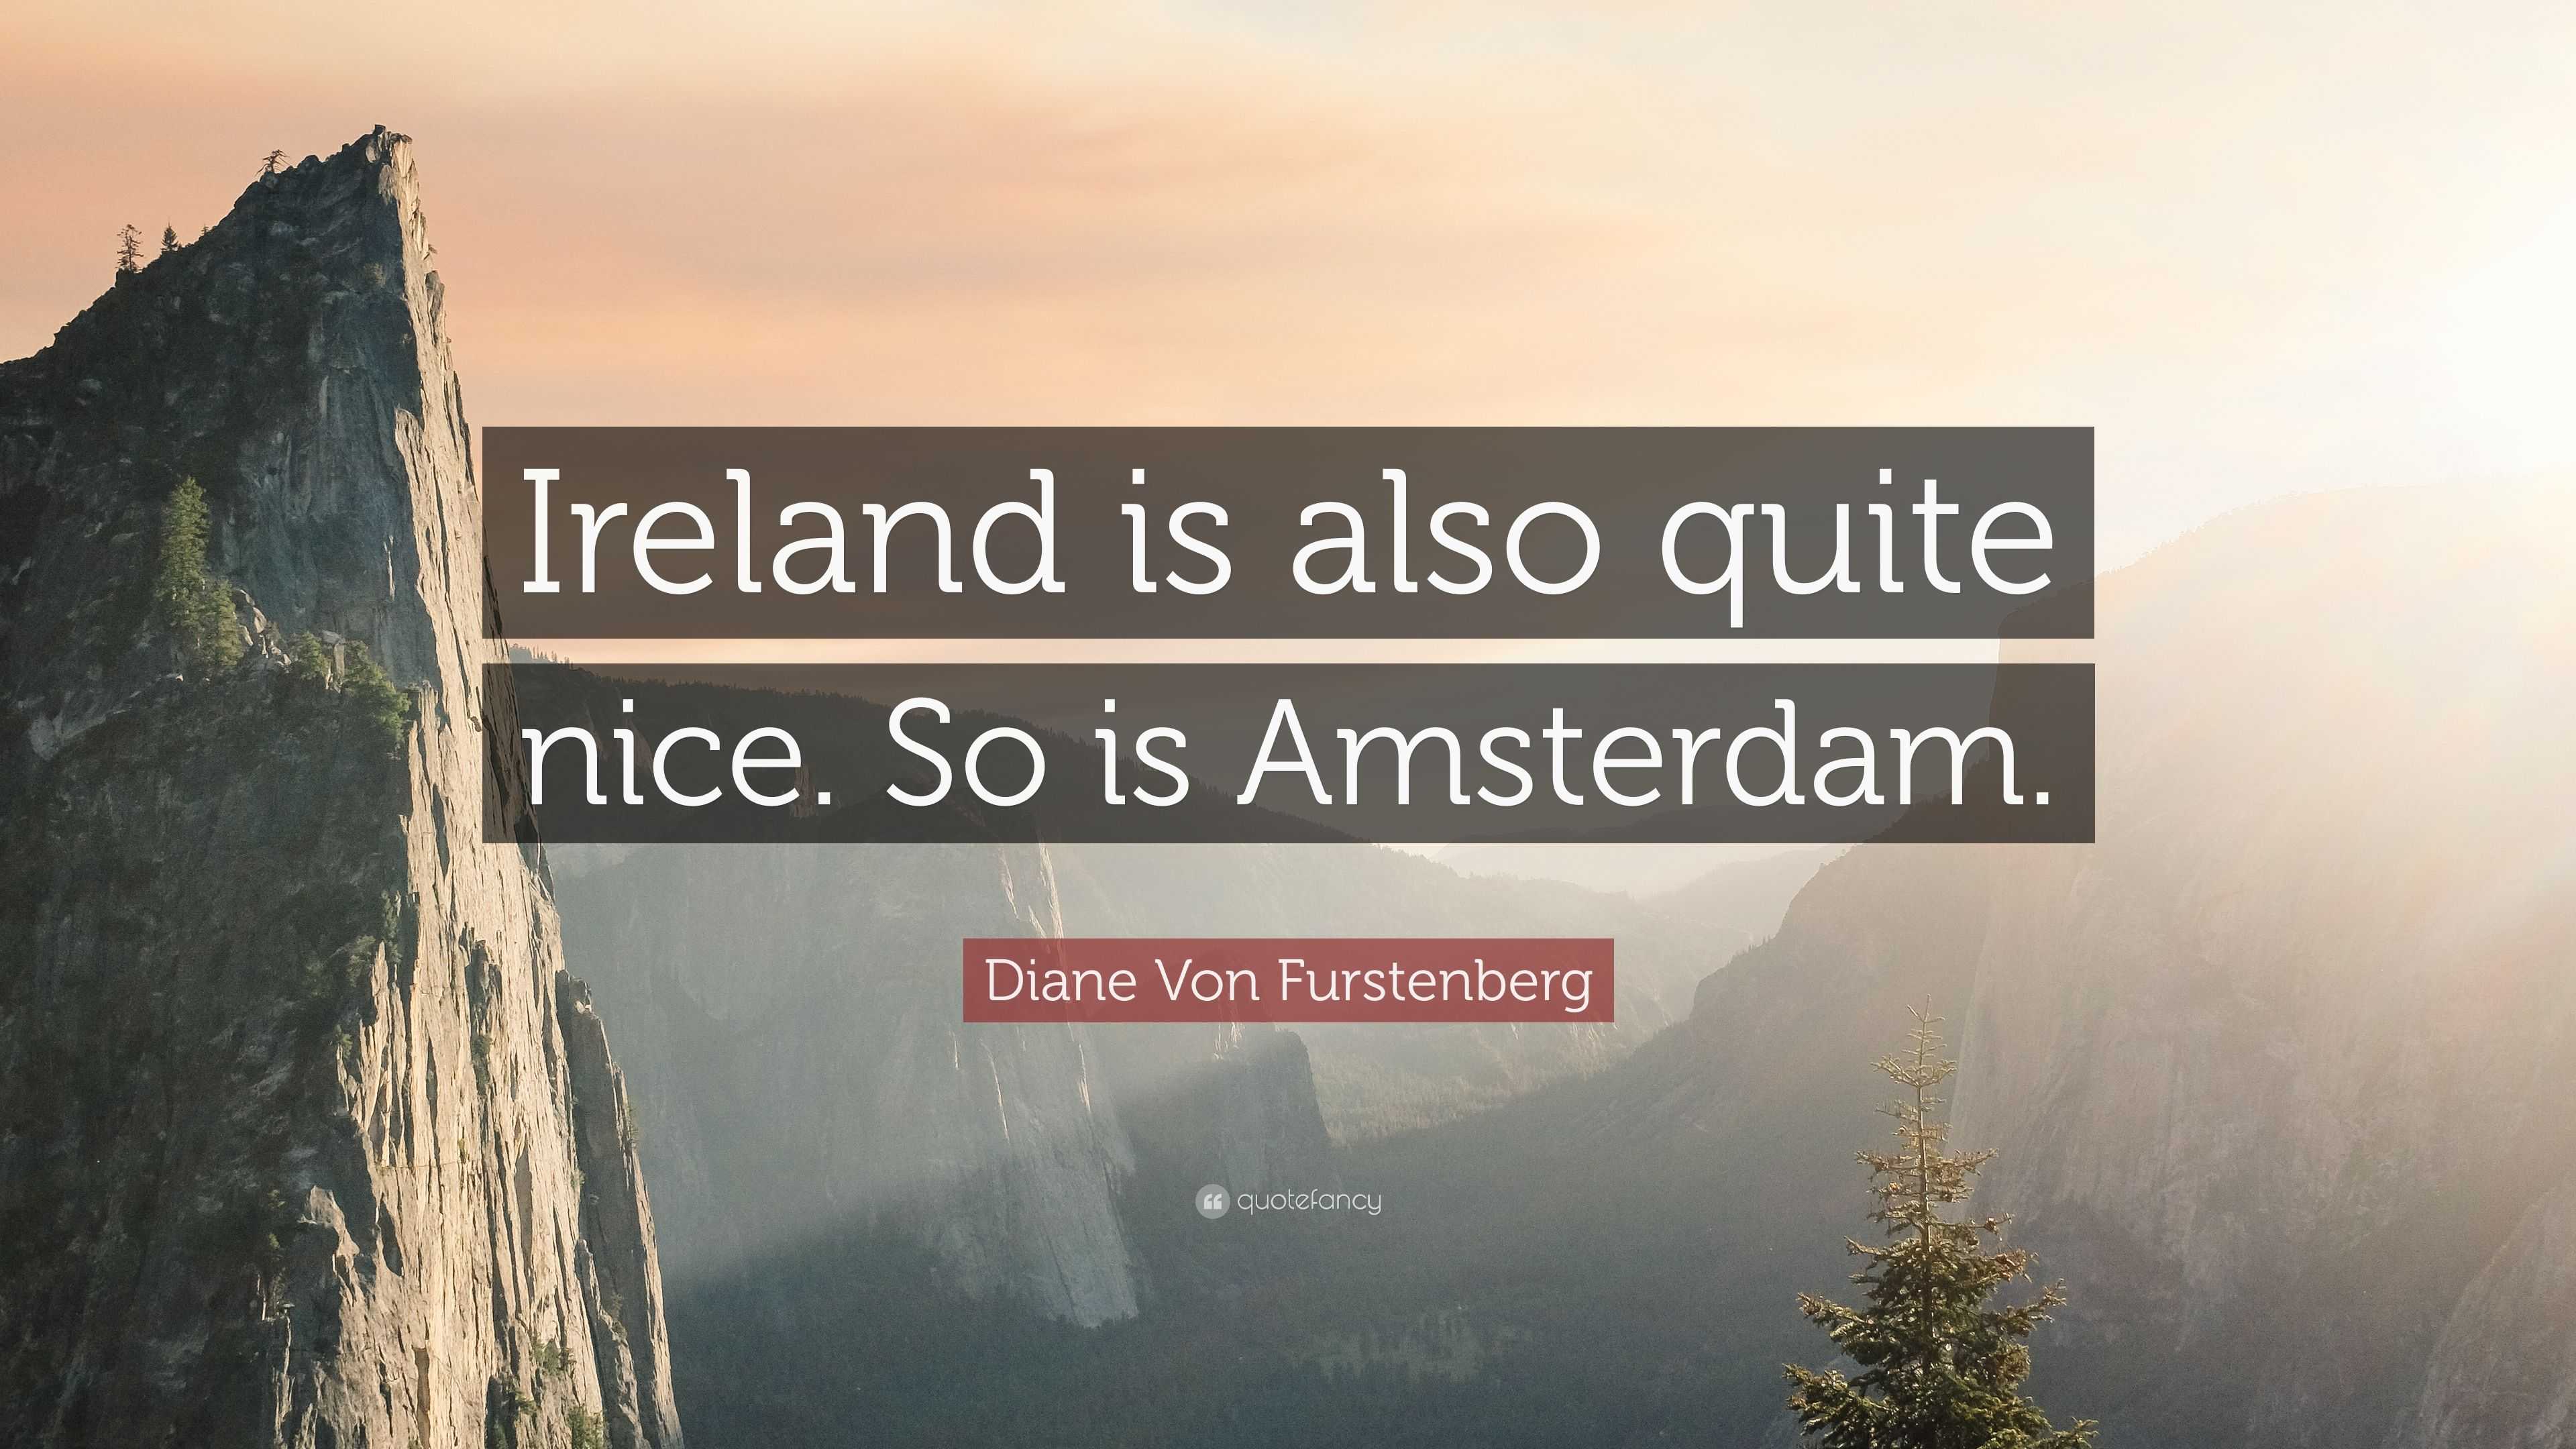 Diane Furstenberg is also quite nice. So Amsterdam.”